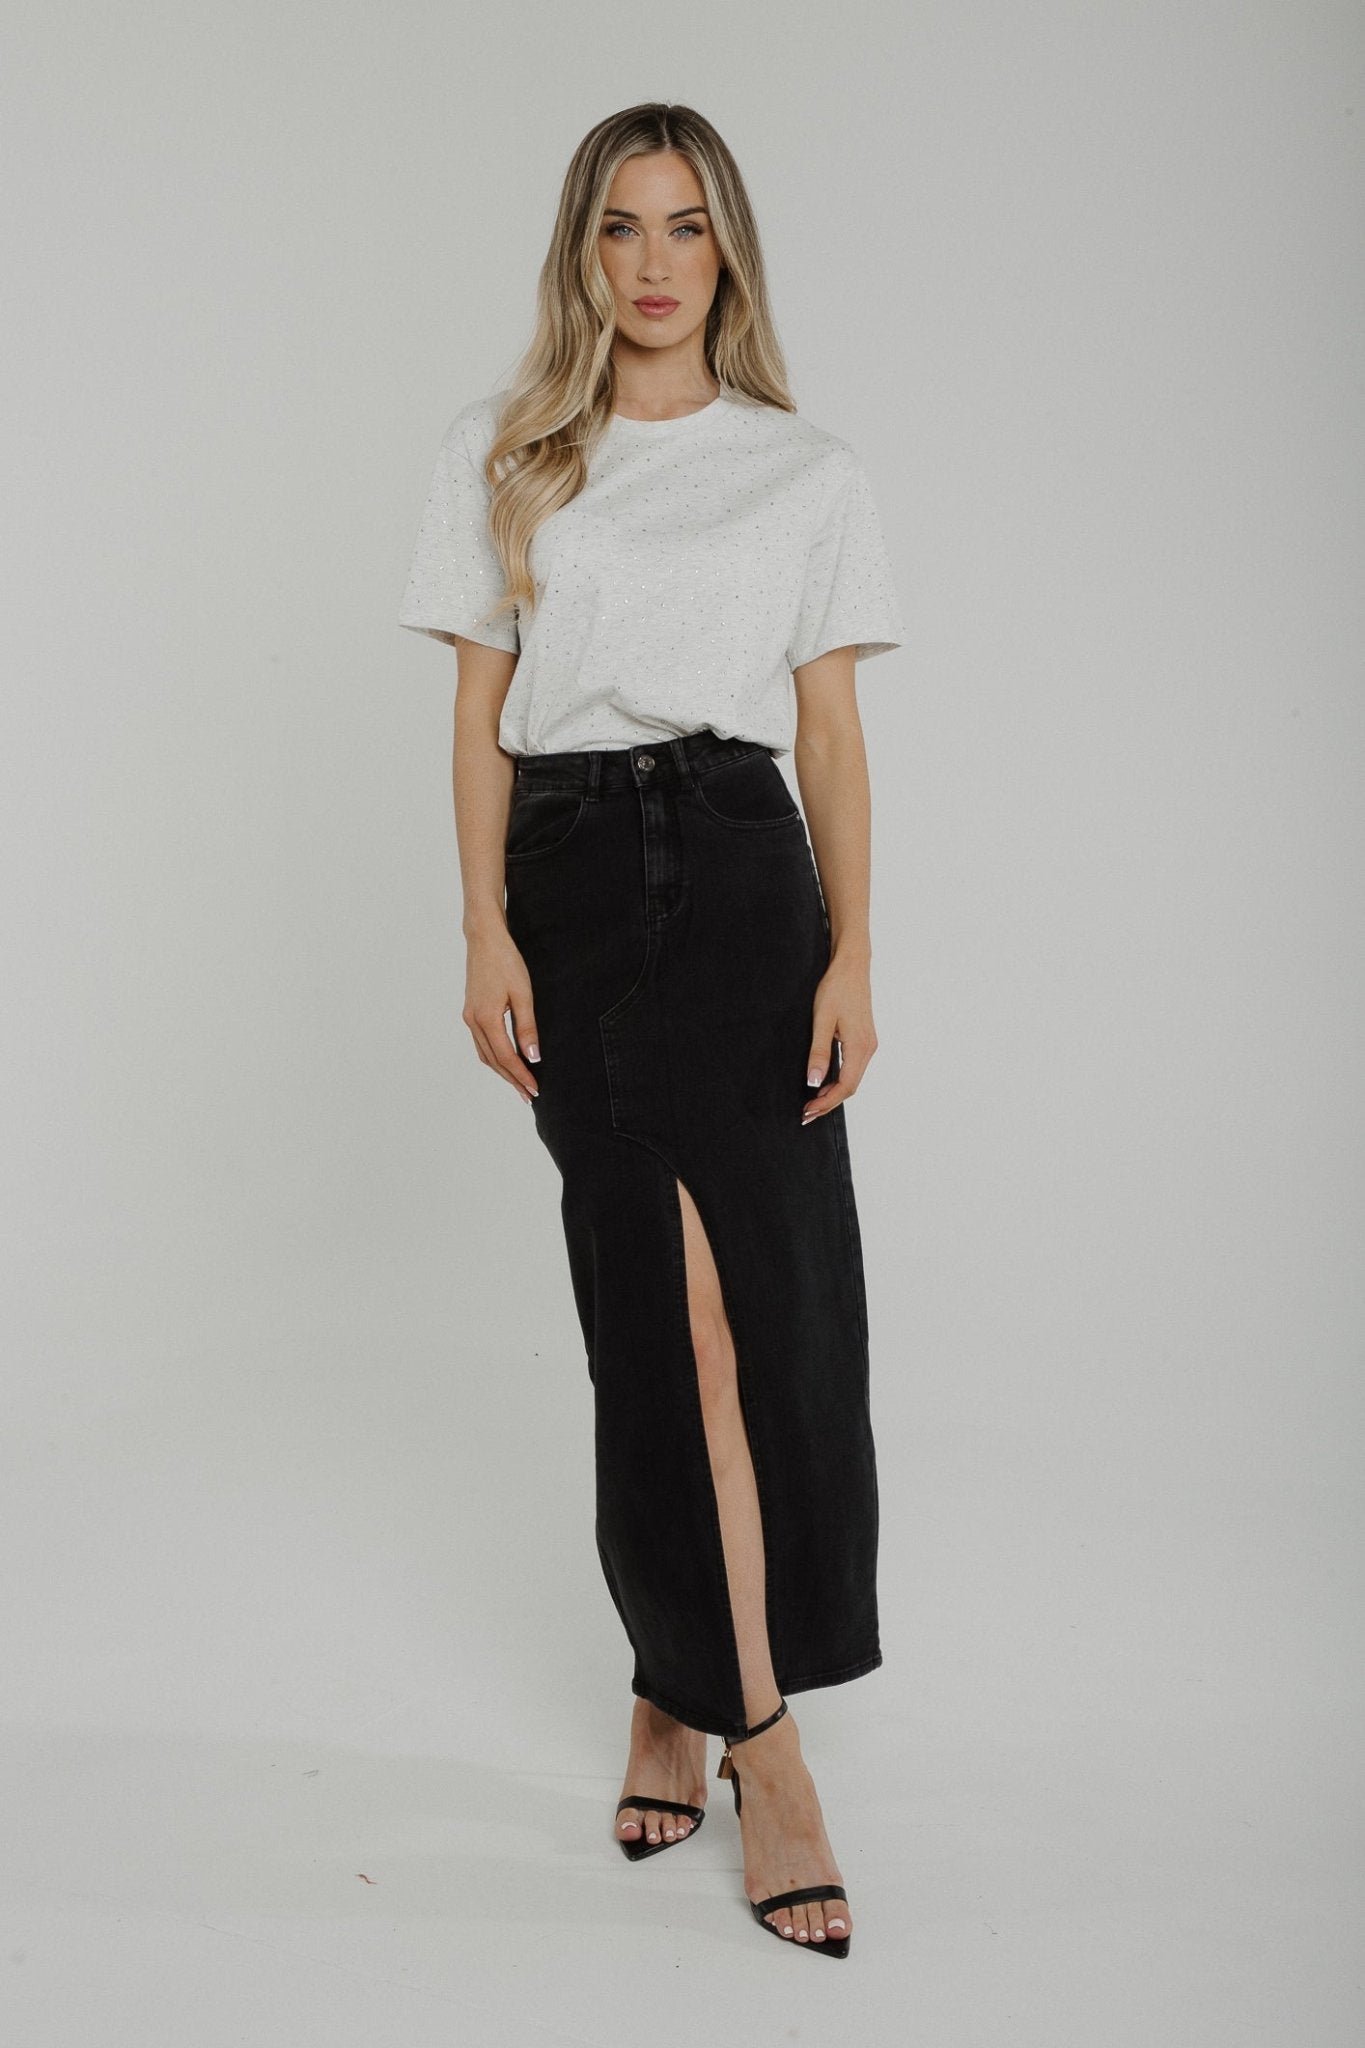 Summer Denim Maxi Skirt In Black - The Walk in Wardrobe